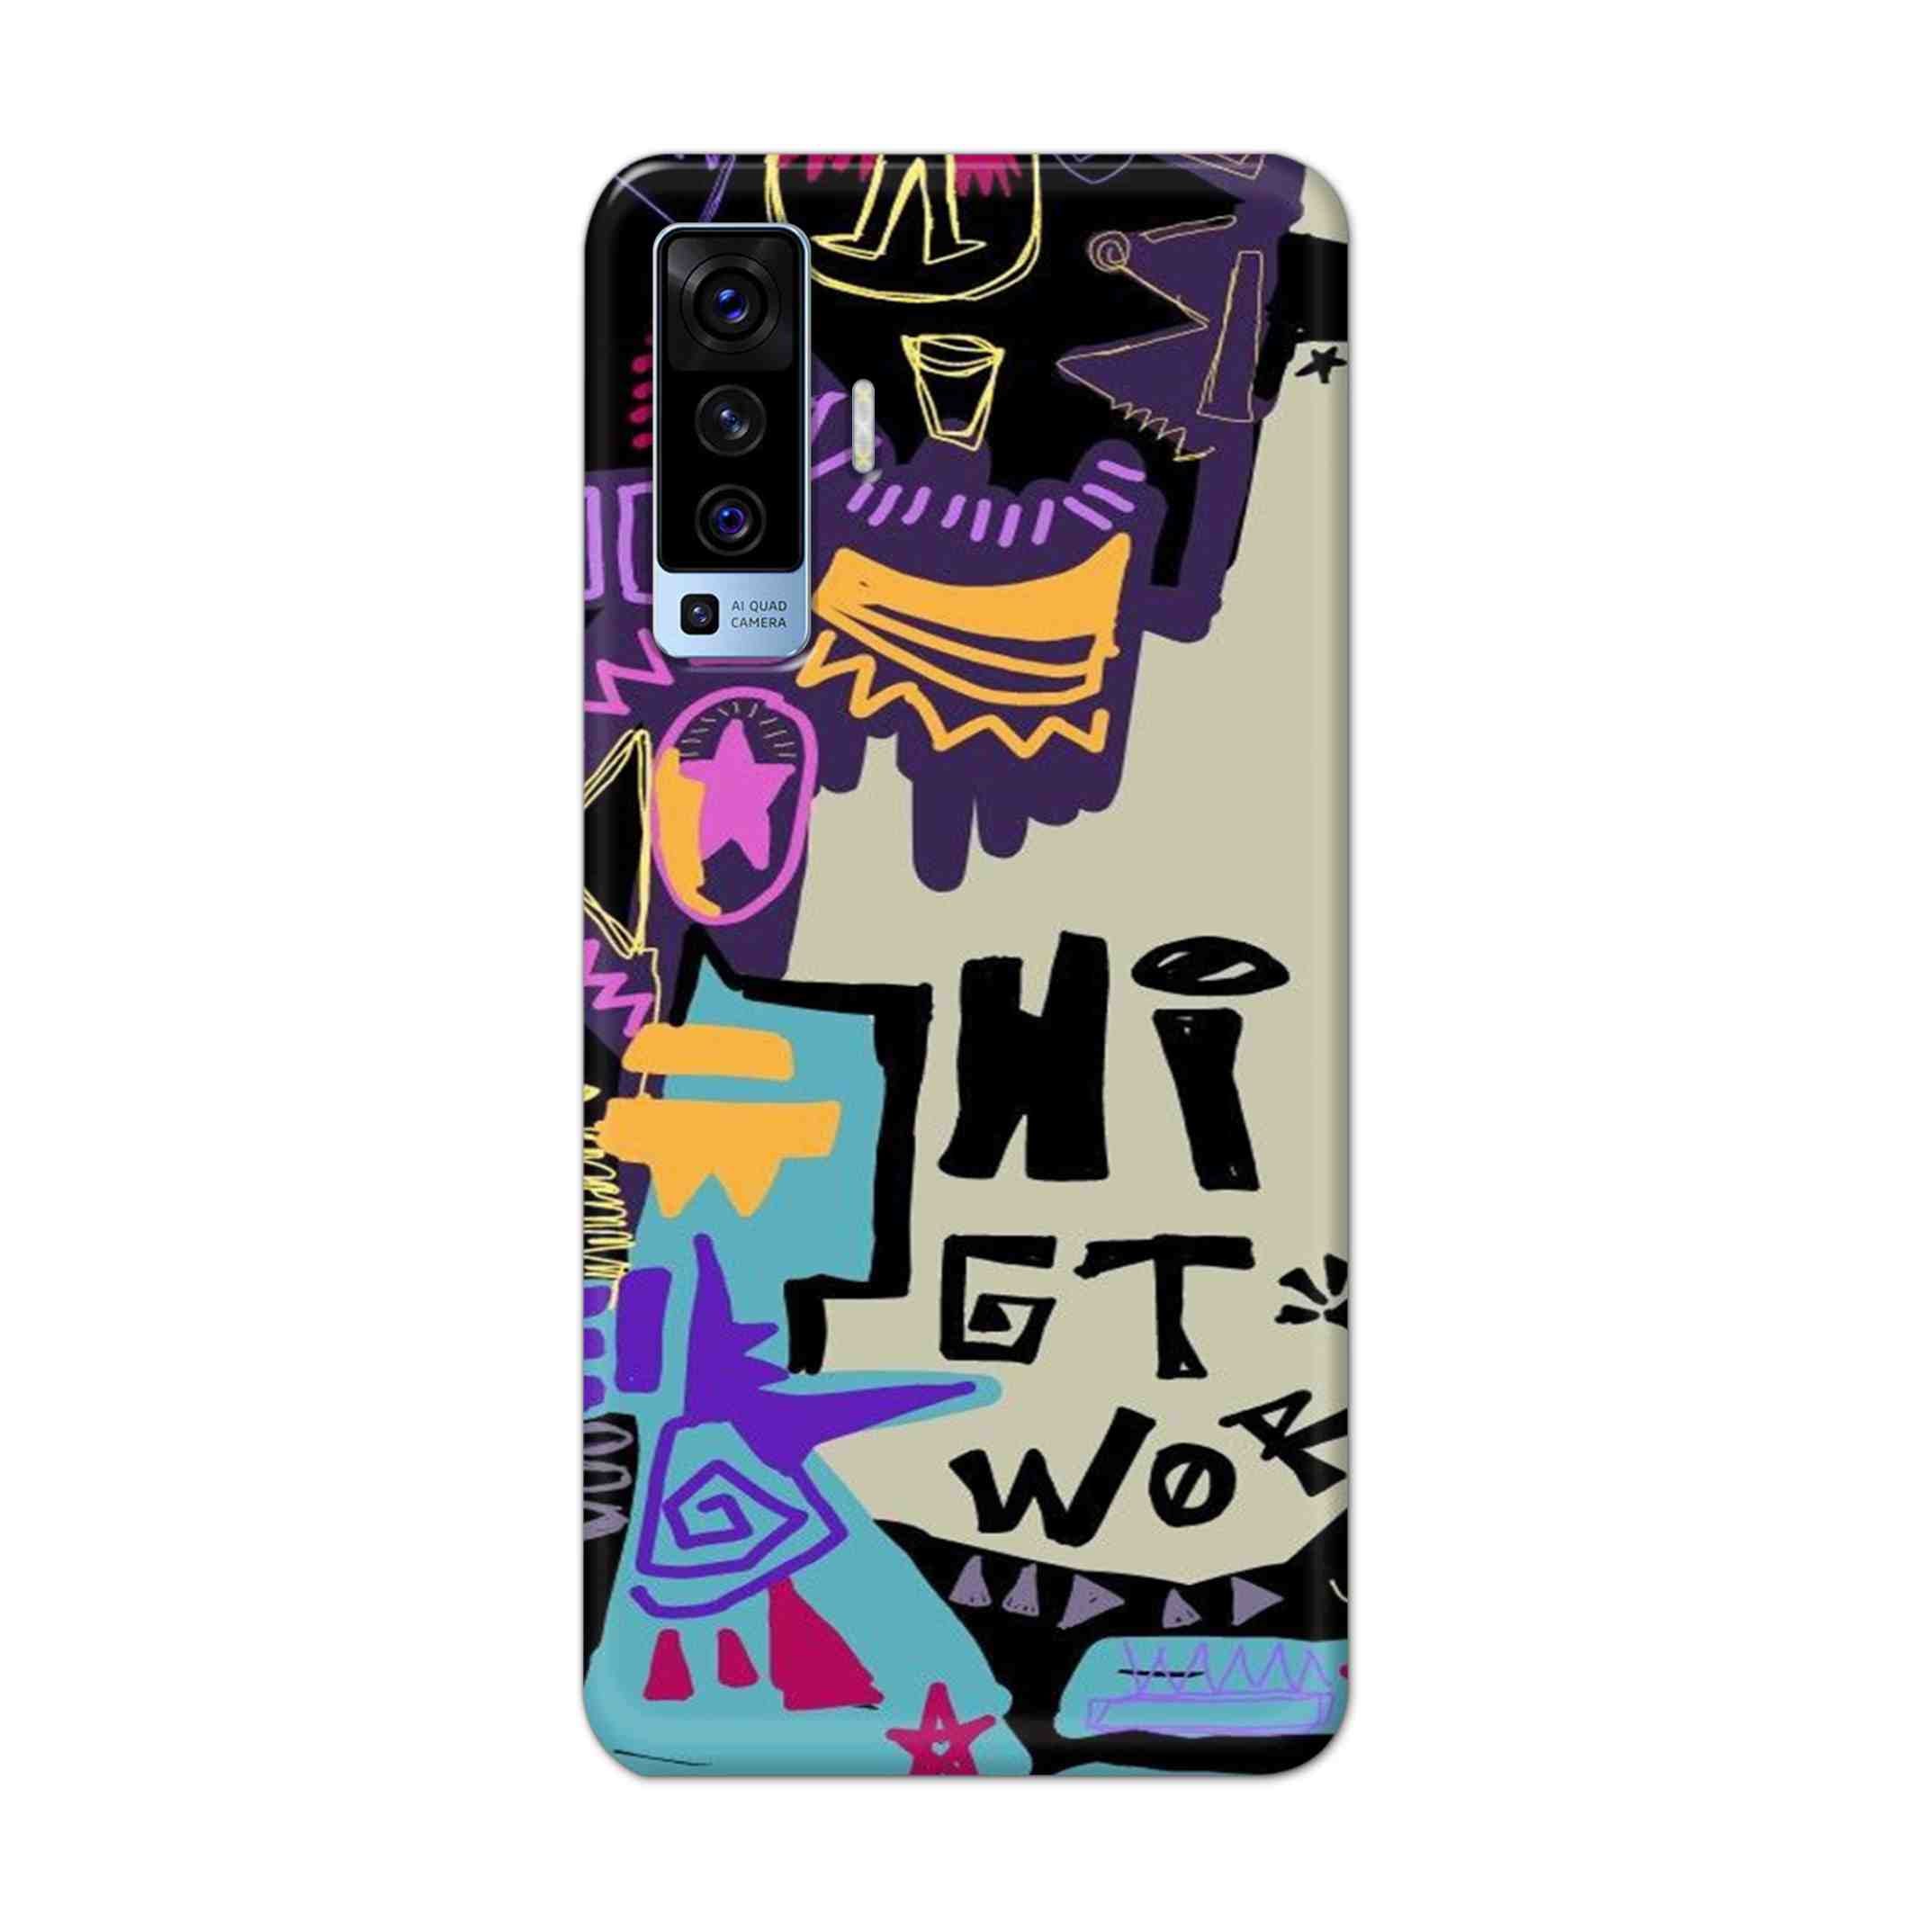 Buy Hi Gt World Hard Back Mobile Phone Case Cover For Vivo X50 Online